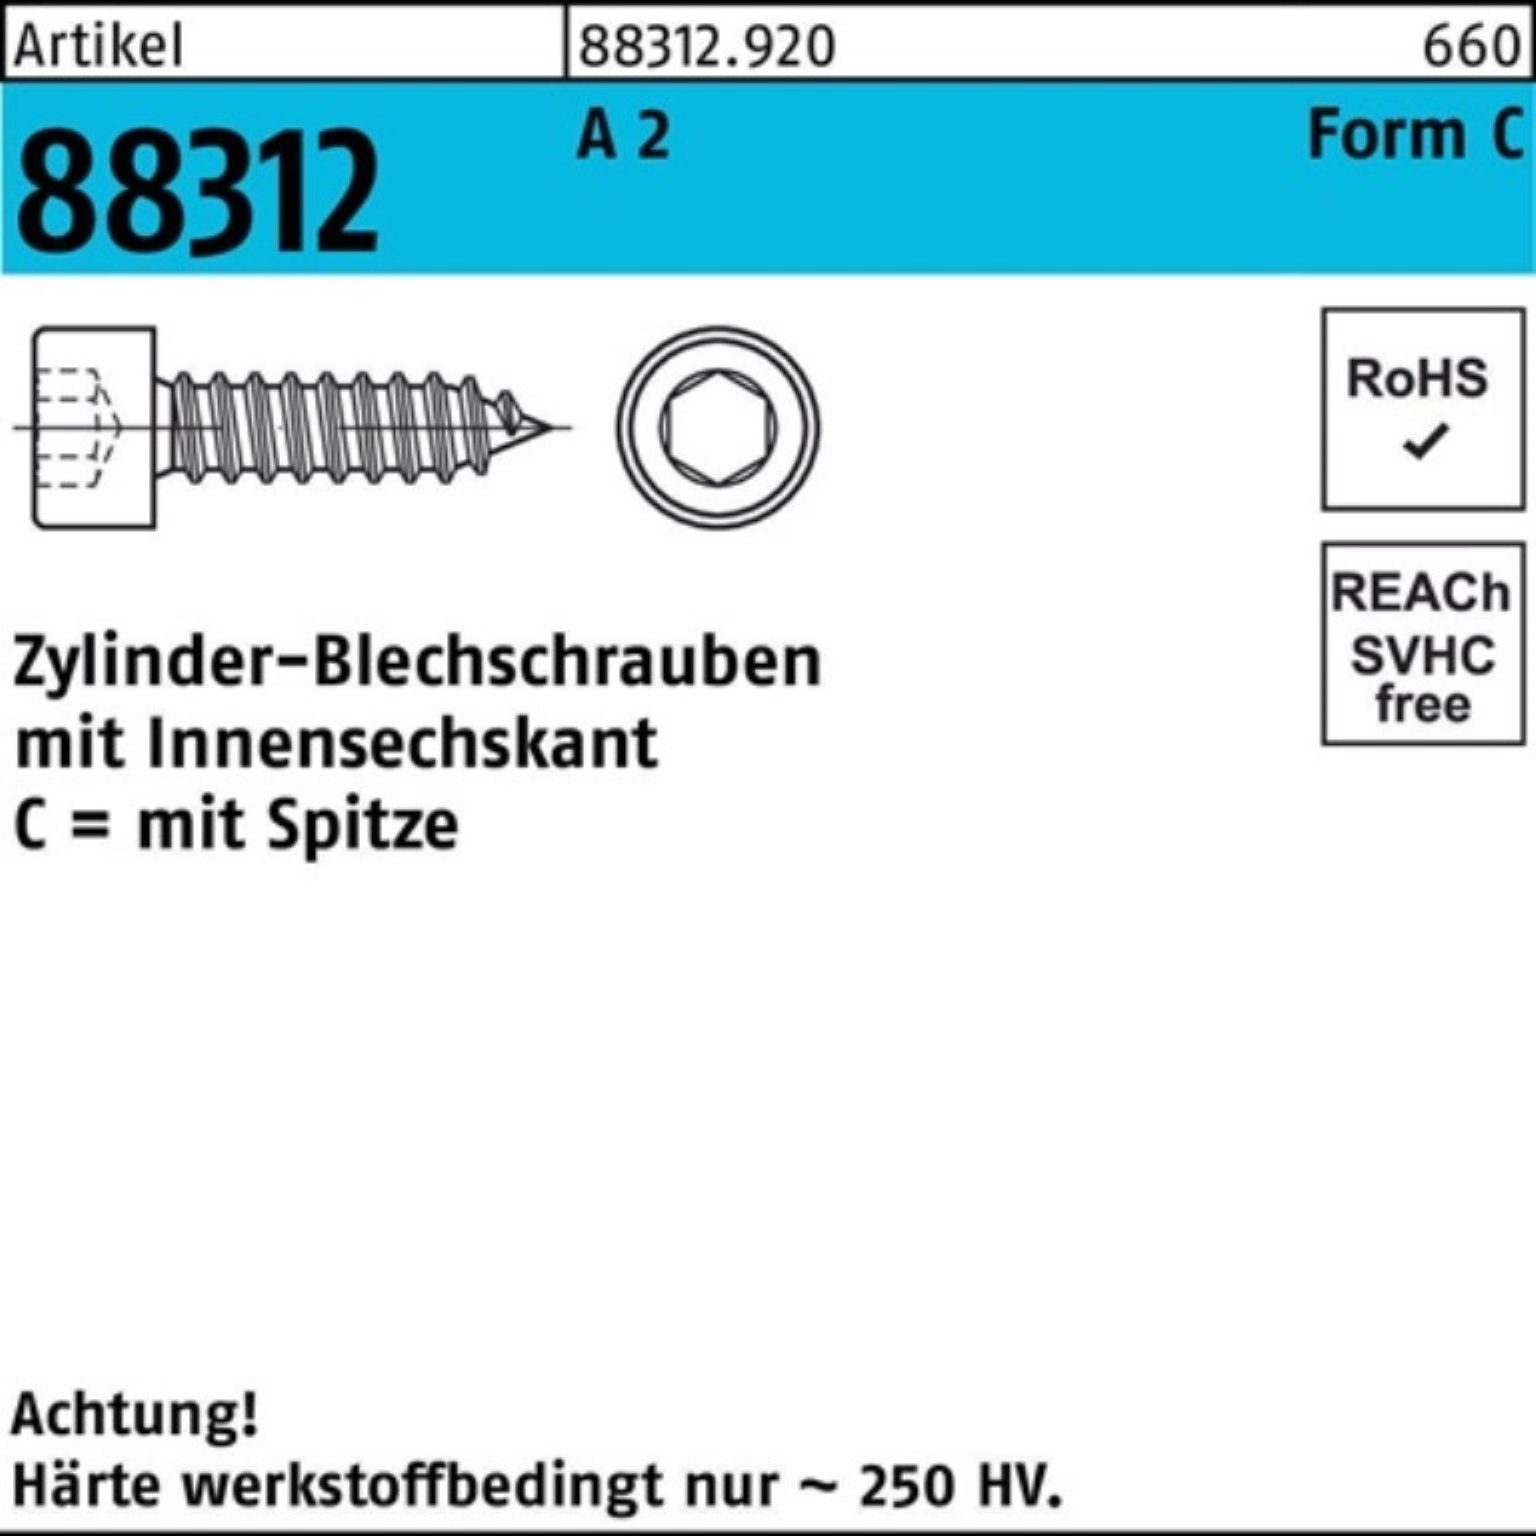 88312 C R A Blechschraube Zylinderblechschraube Spitze/Innen-6kt Pack 70 5,5x Reyher 200er